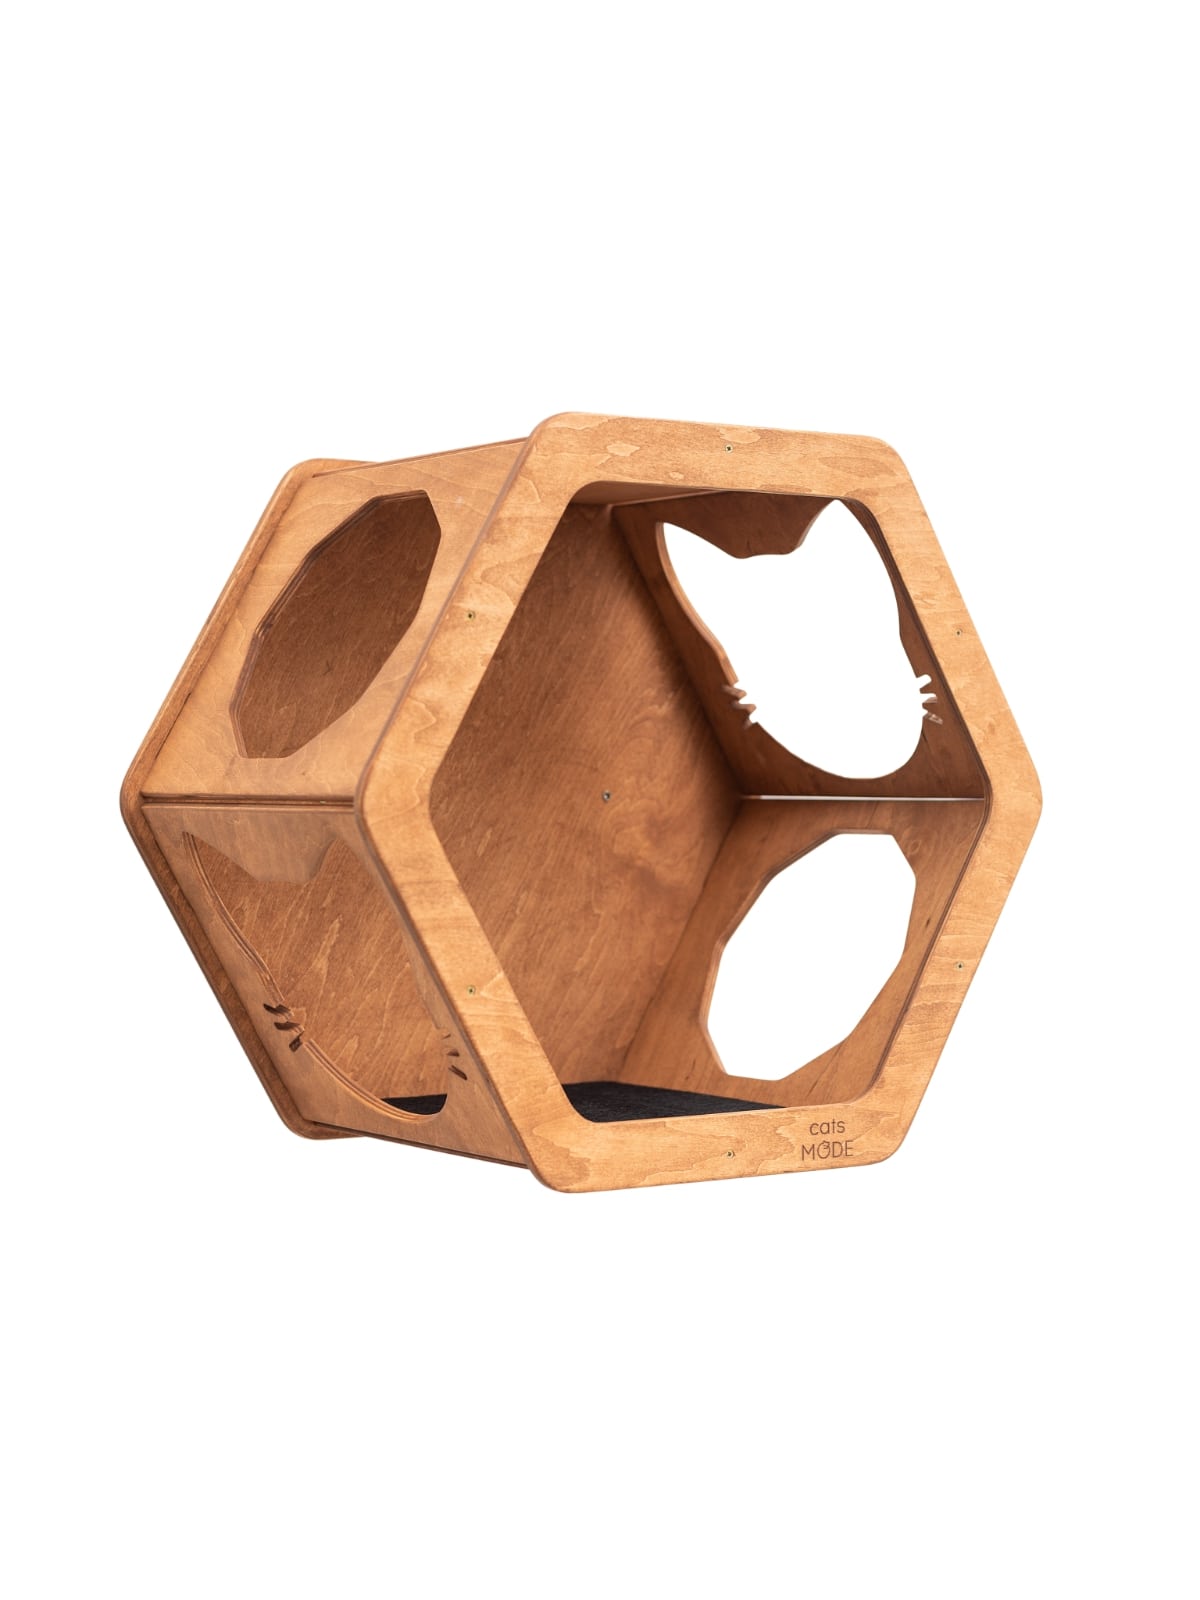 cat hexagon shelf made from natural wood